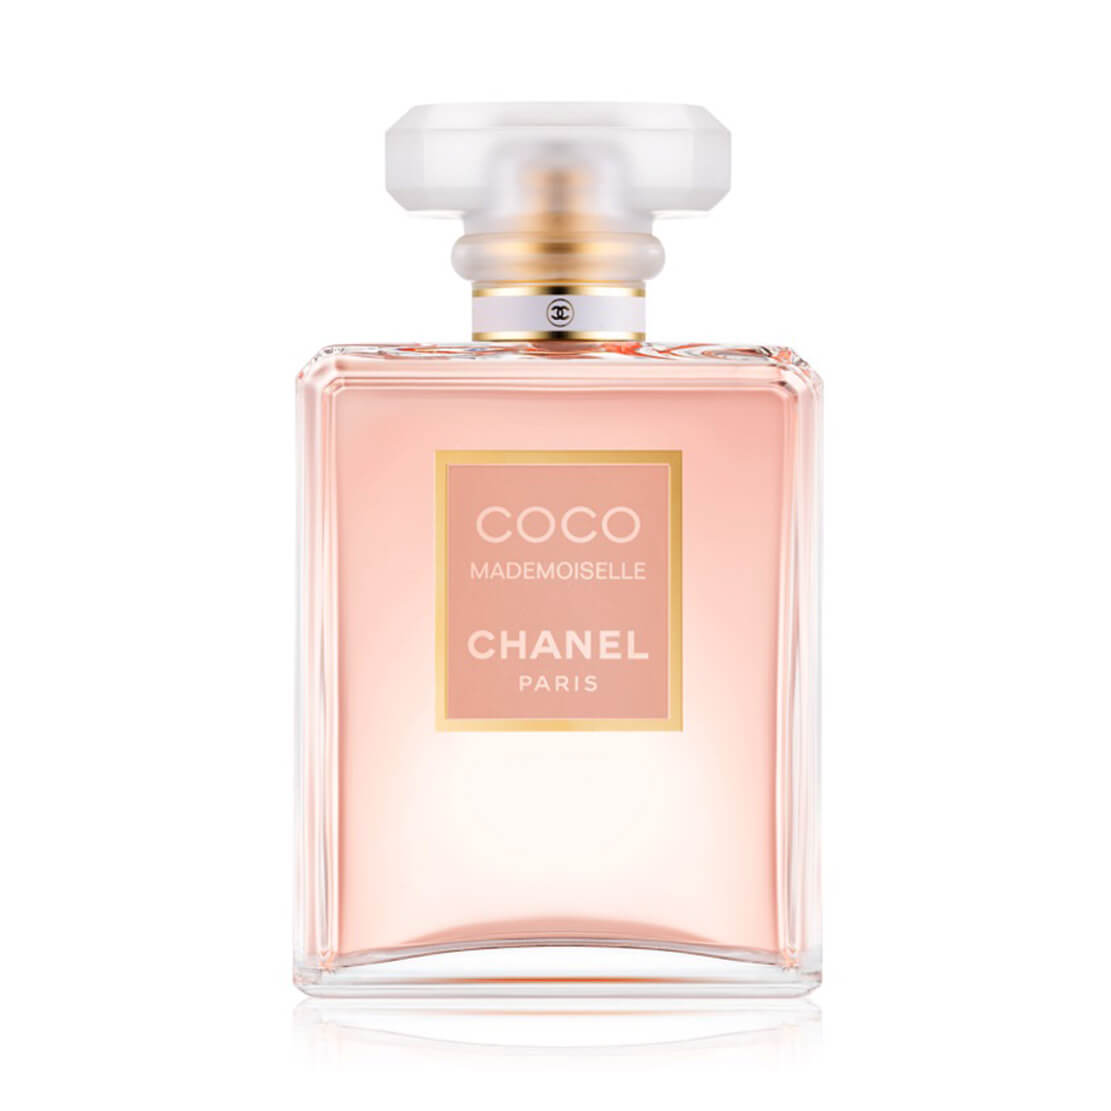 Buy Chanel Fragrance COCO Mademoiselle For Women's Eau de Parfum